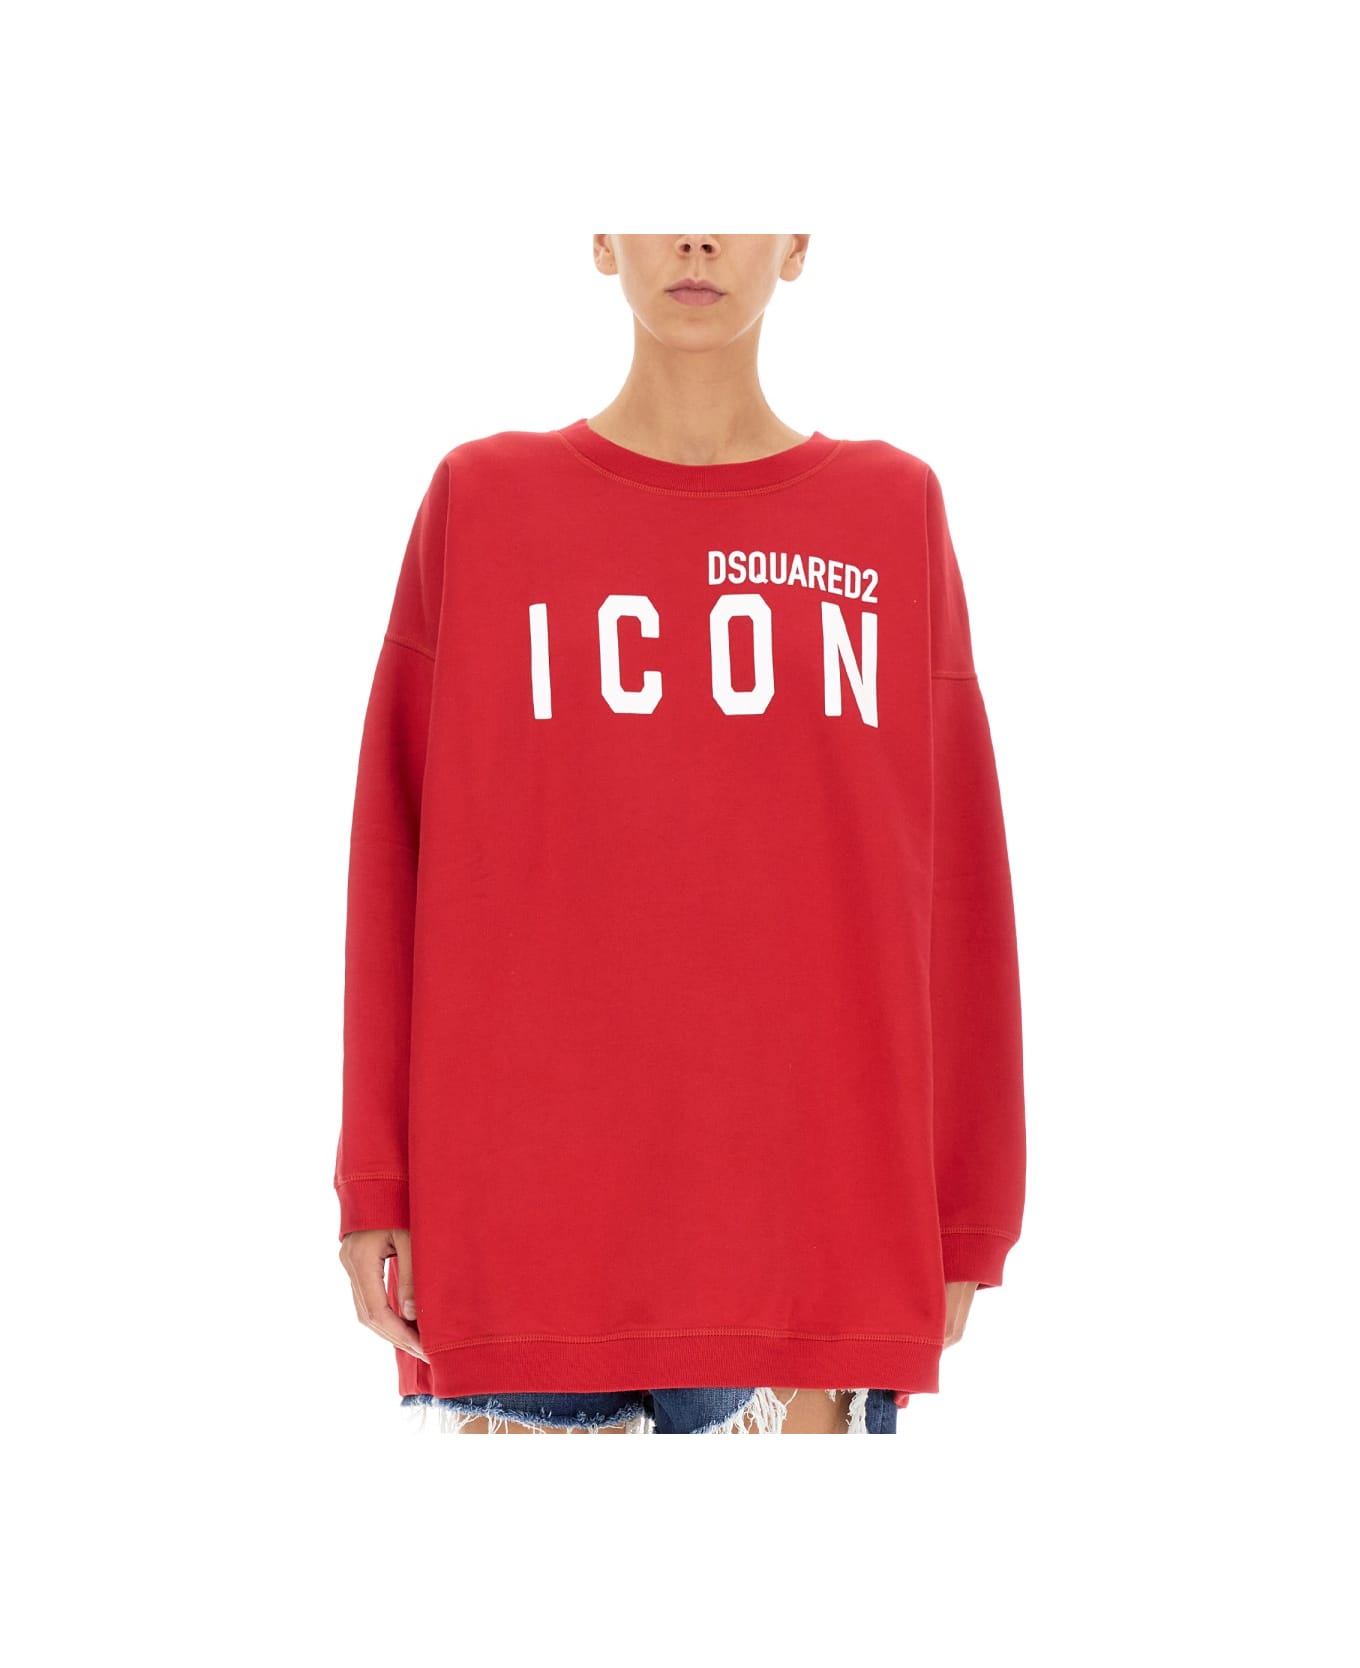 Dsquared2 "icon" Sweatshirt - RED